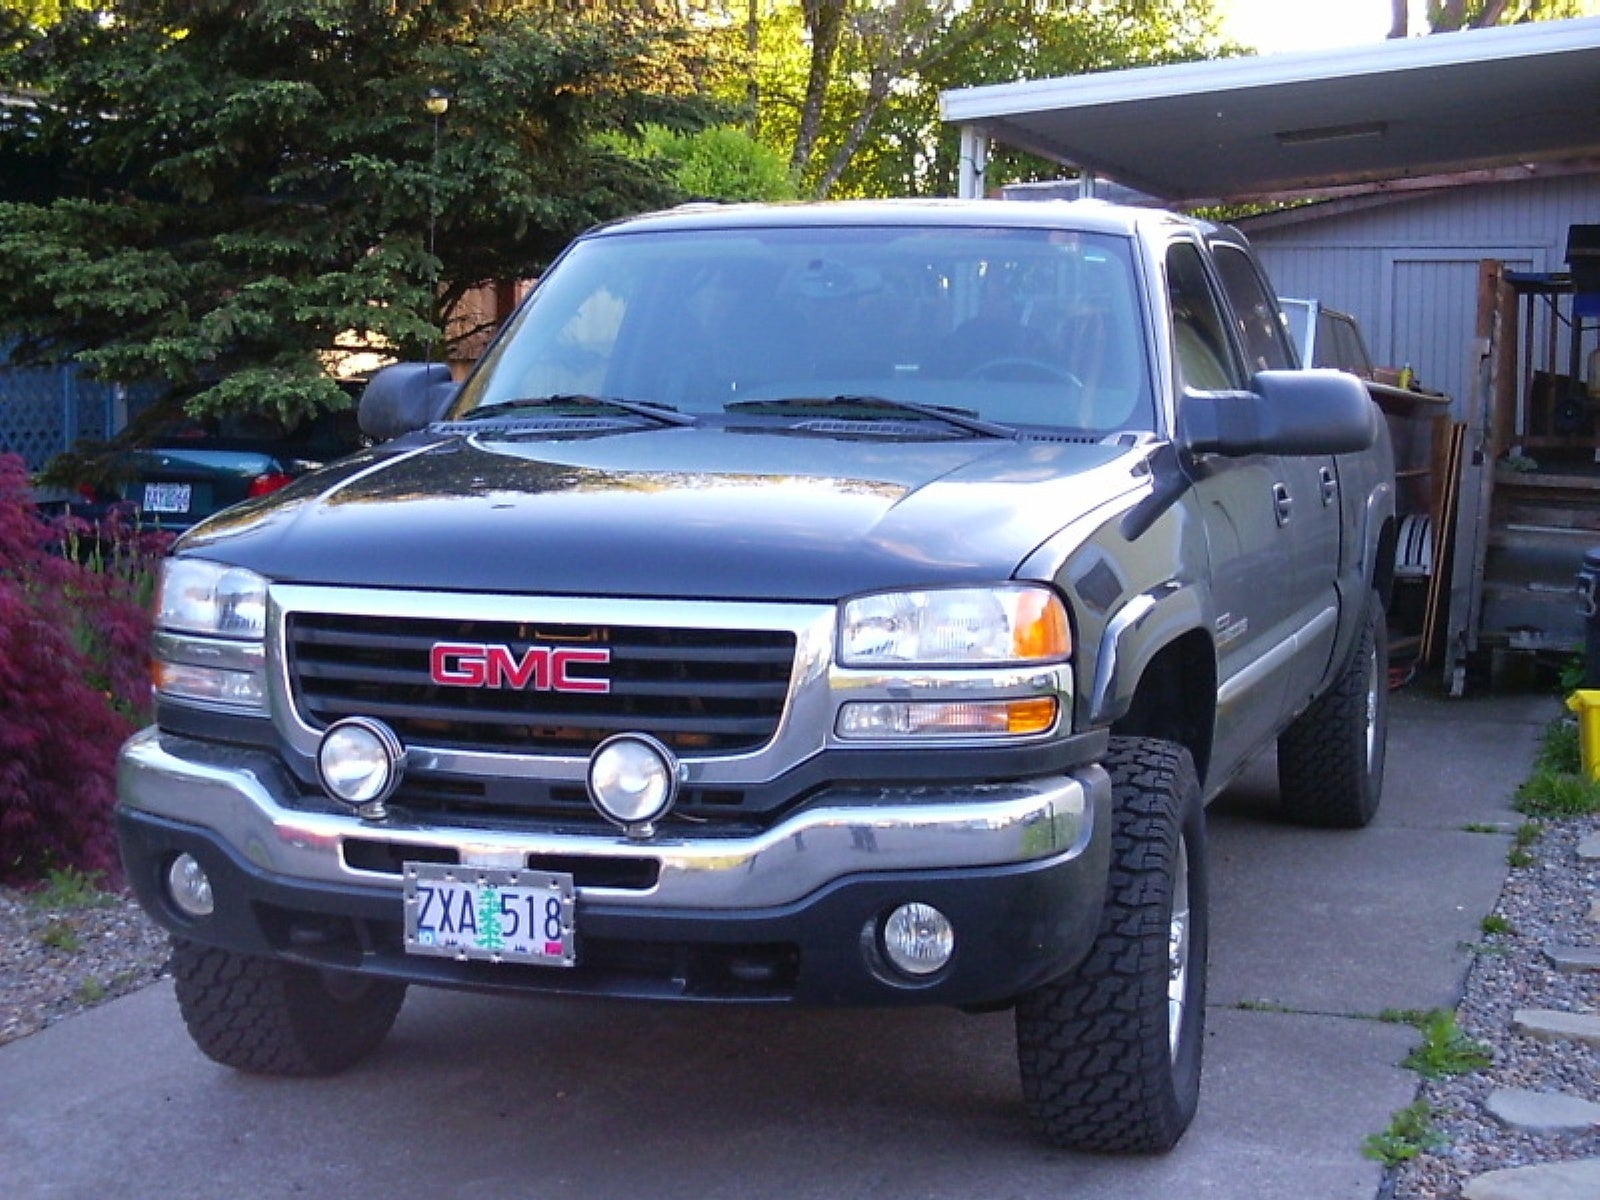 2004 Gmc sierra color options